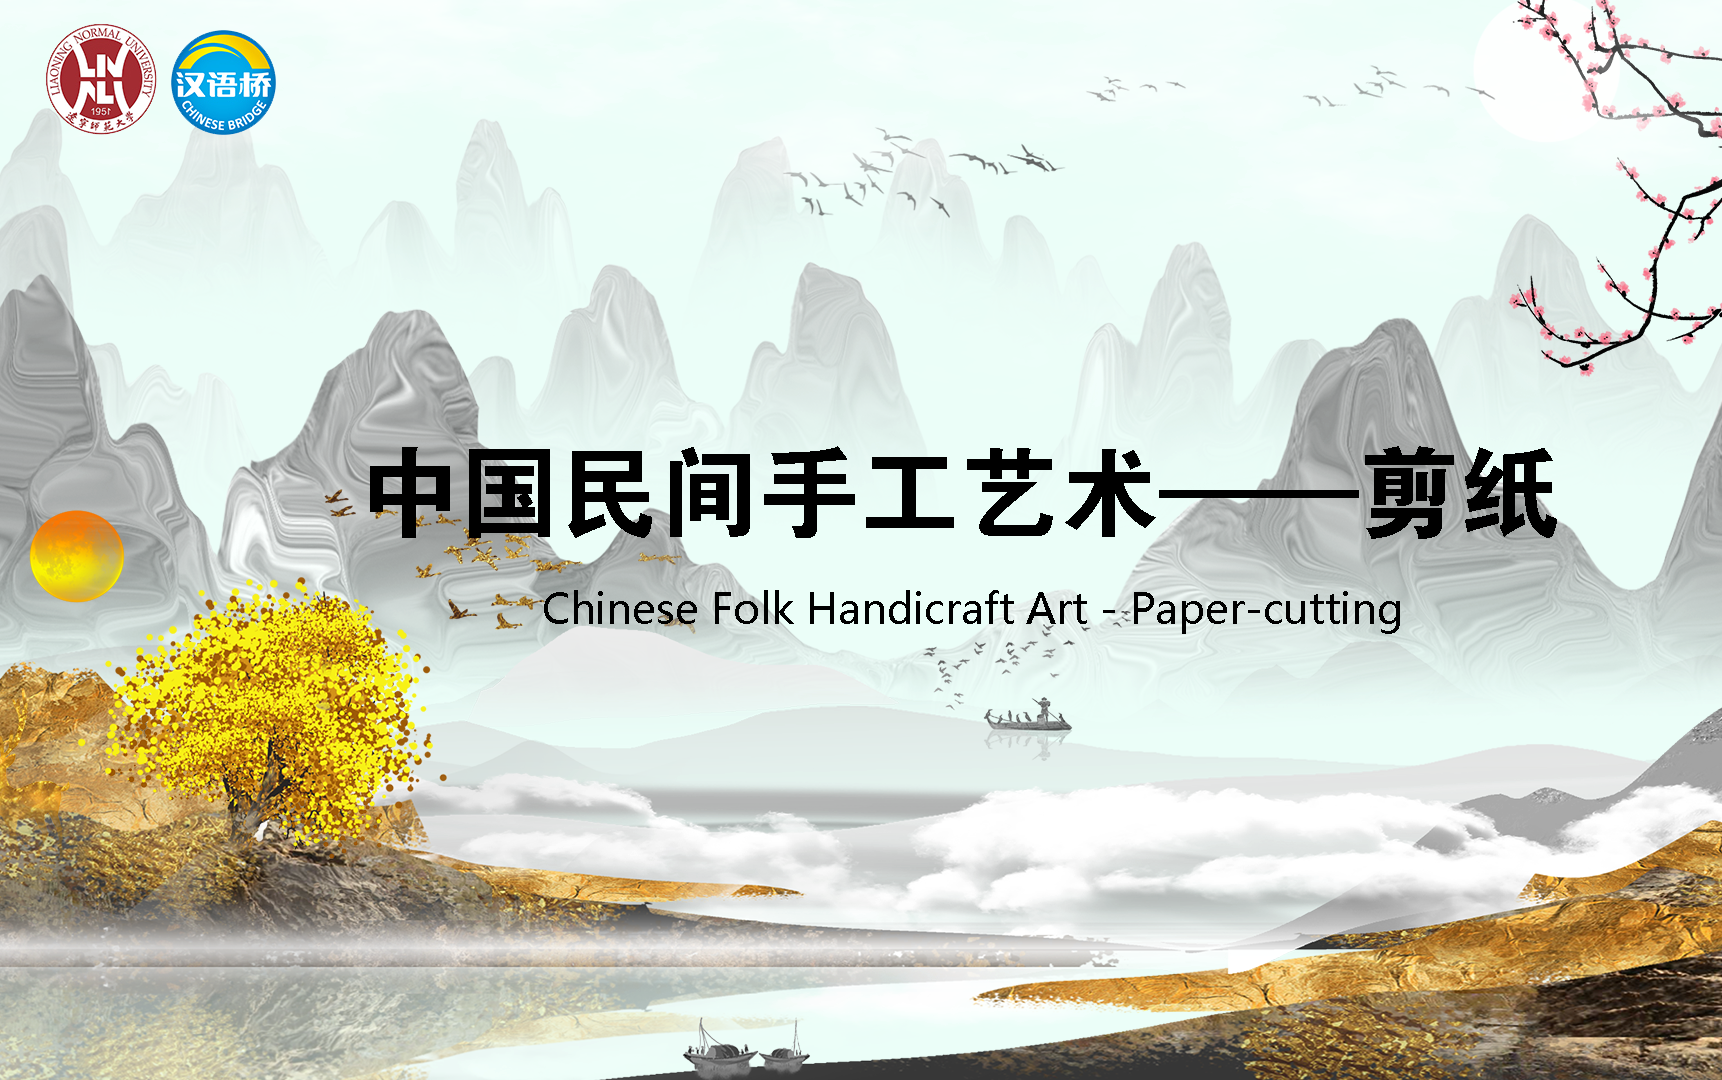 Chinese Folk Handicraft Art -- Paper-cutting